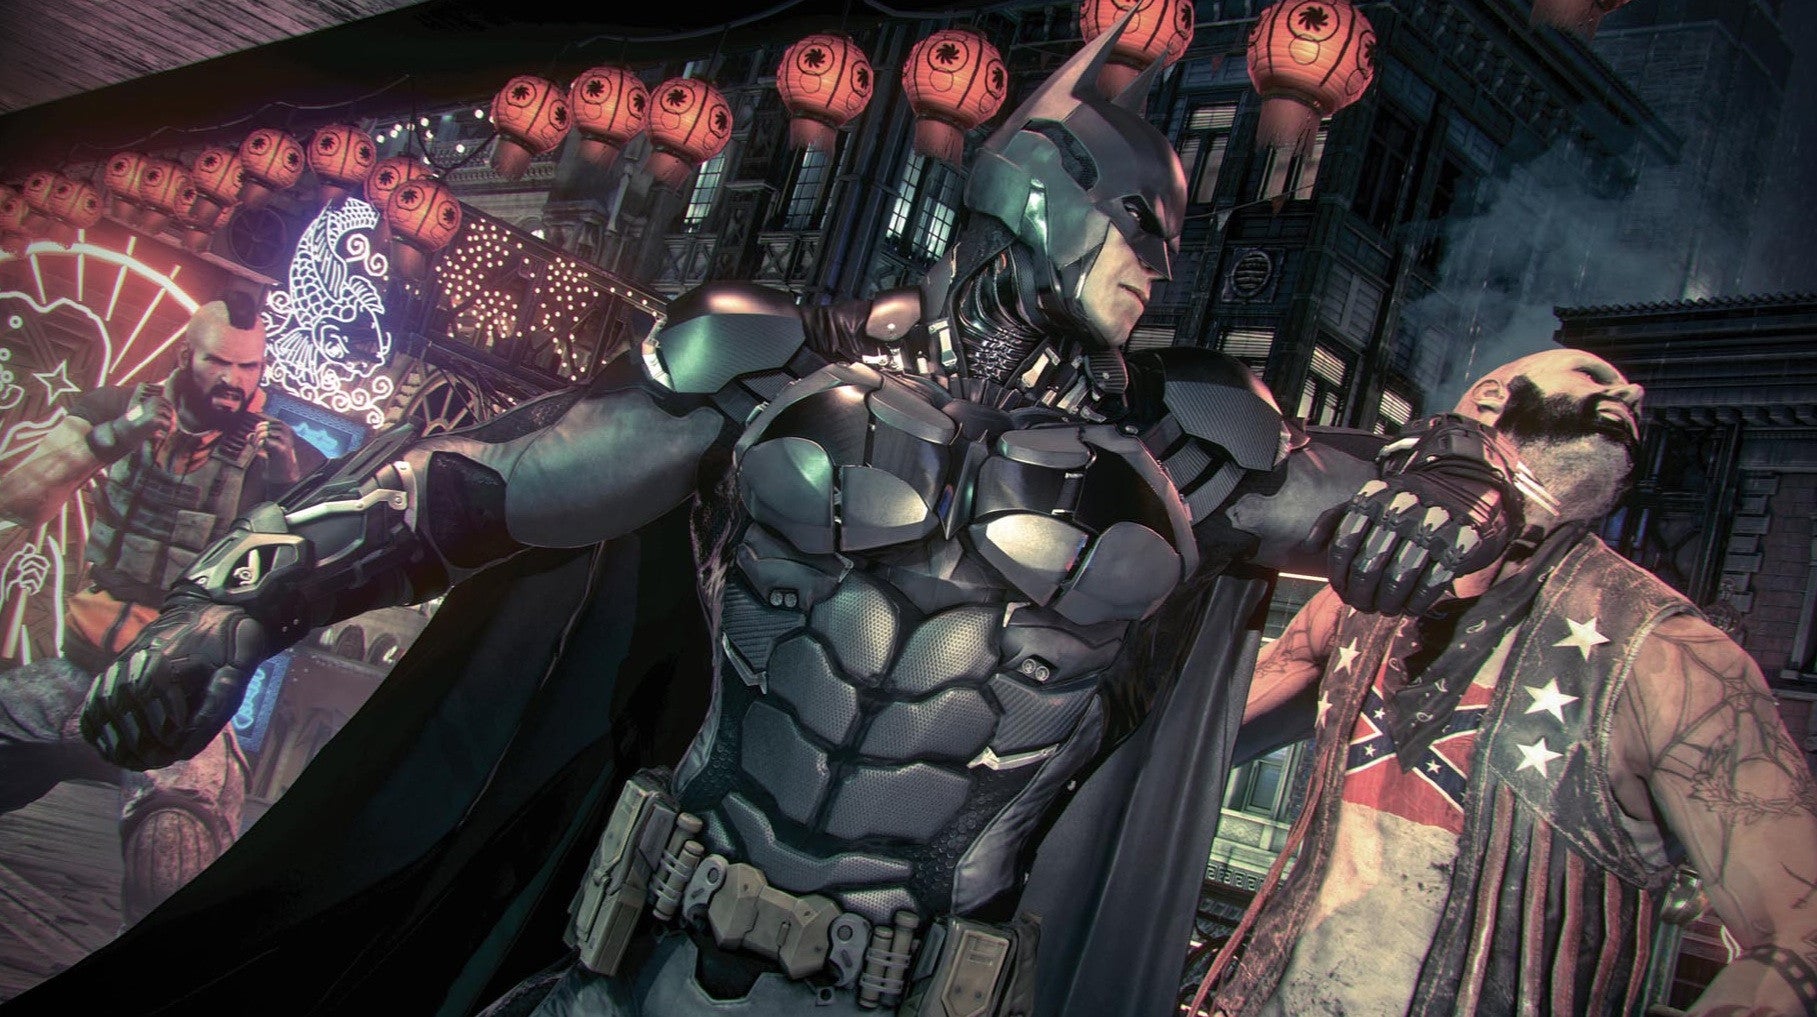 Image for Batman: Arkham Knight PC won't be fixed till September - report